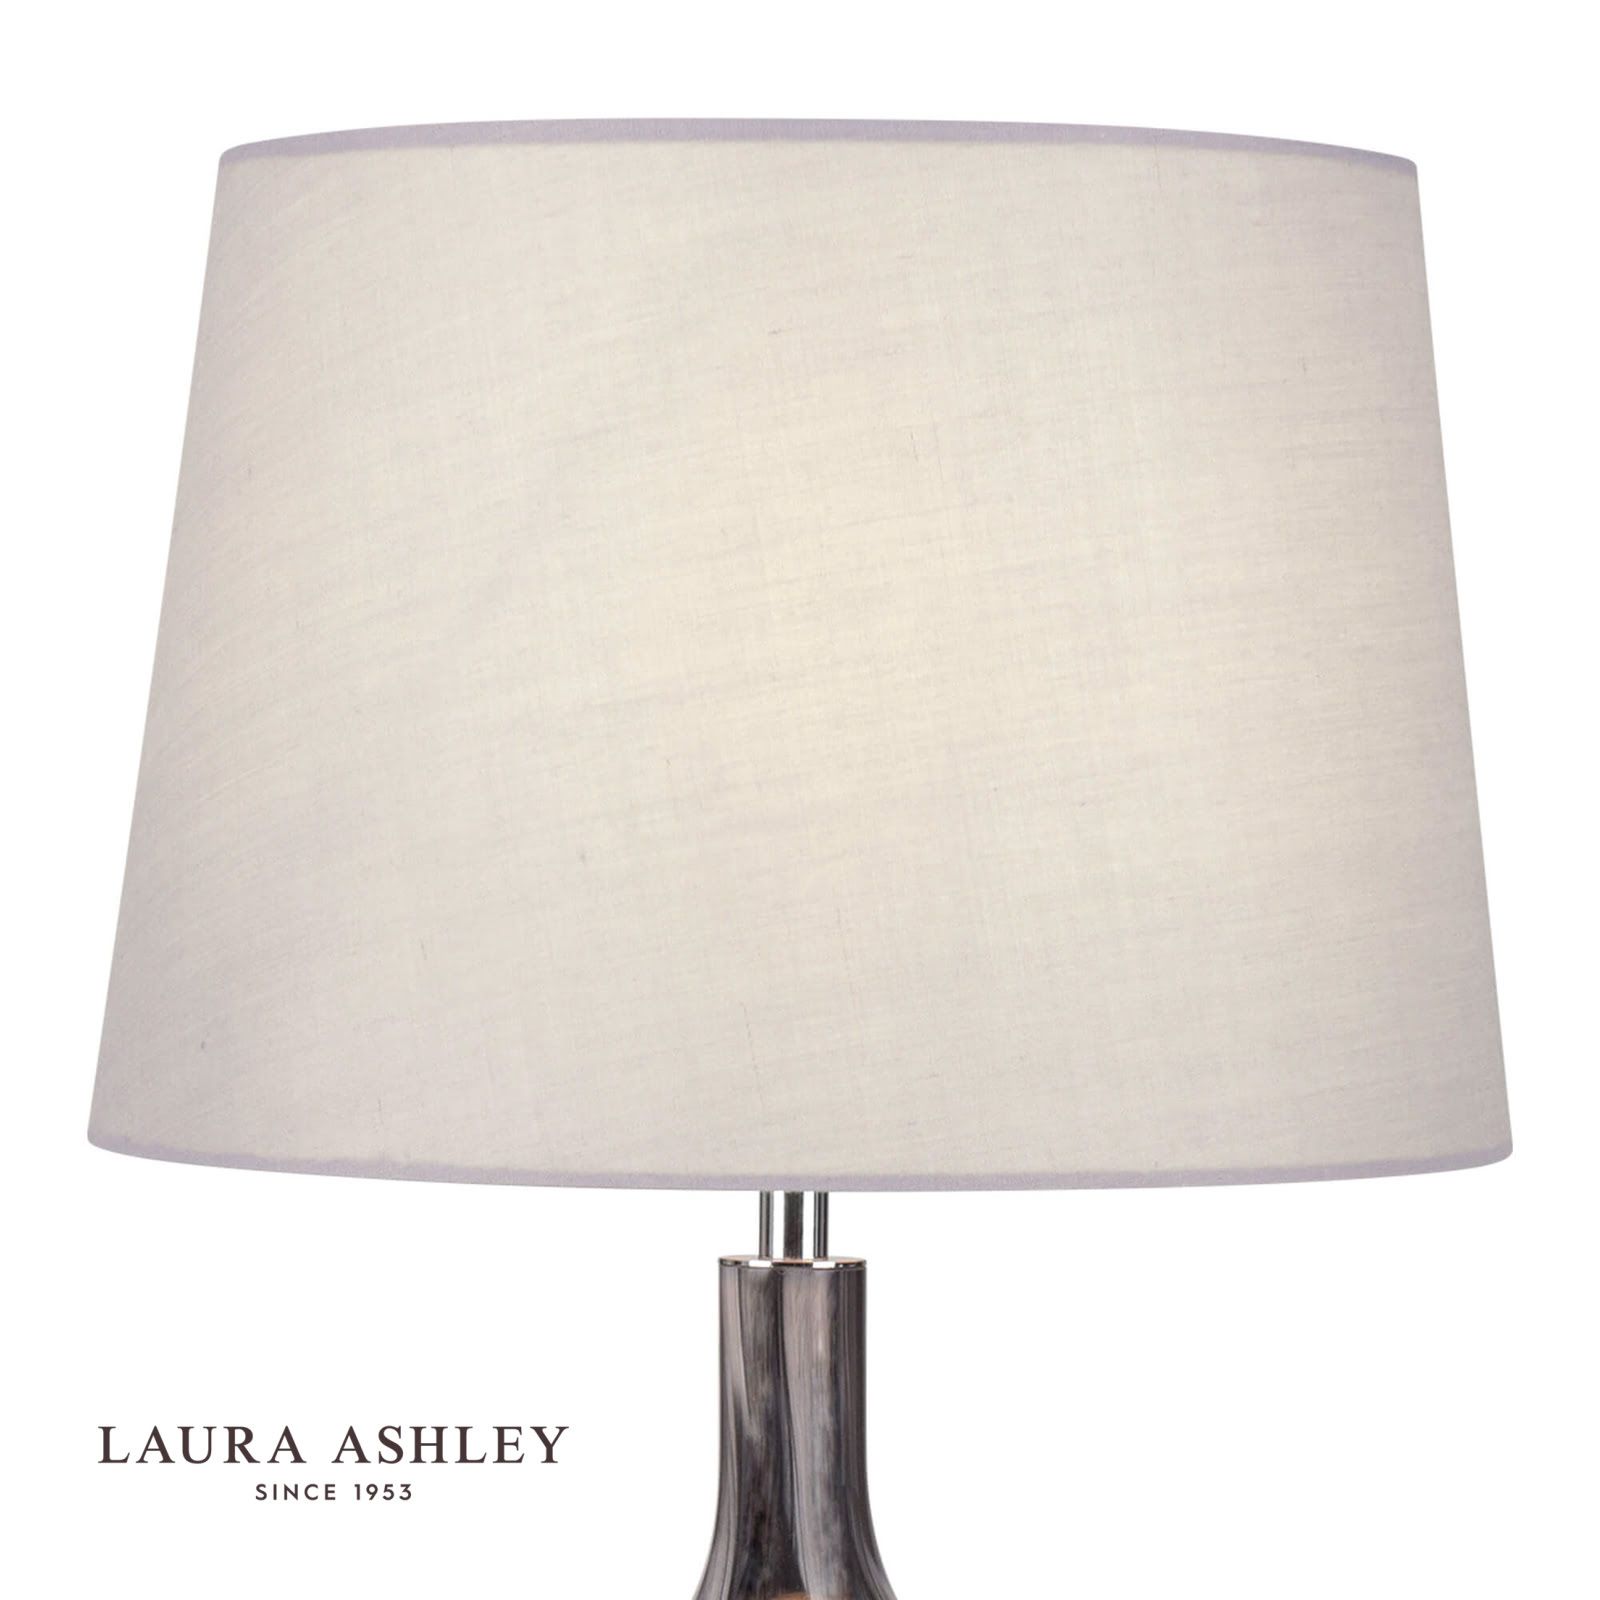 Laura Ashley Swirl Table Lamp Grey, Silver Swirl Table Lamp